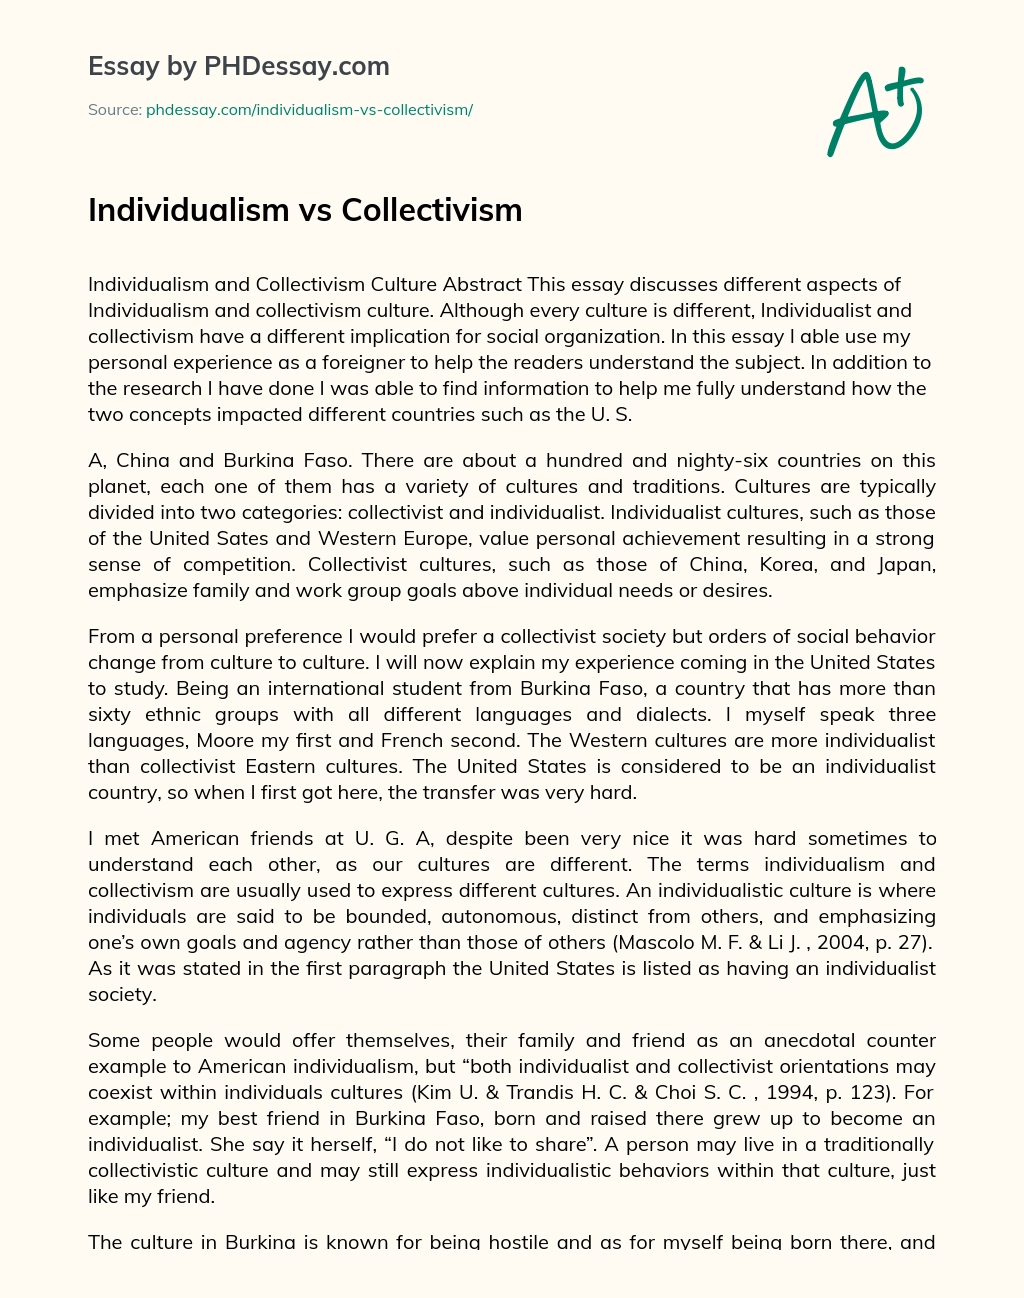 Individualism vs Collectivism essay